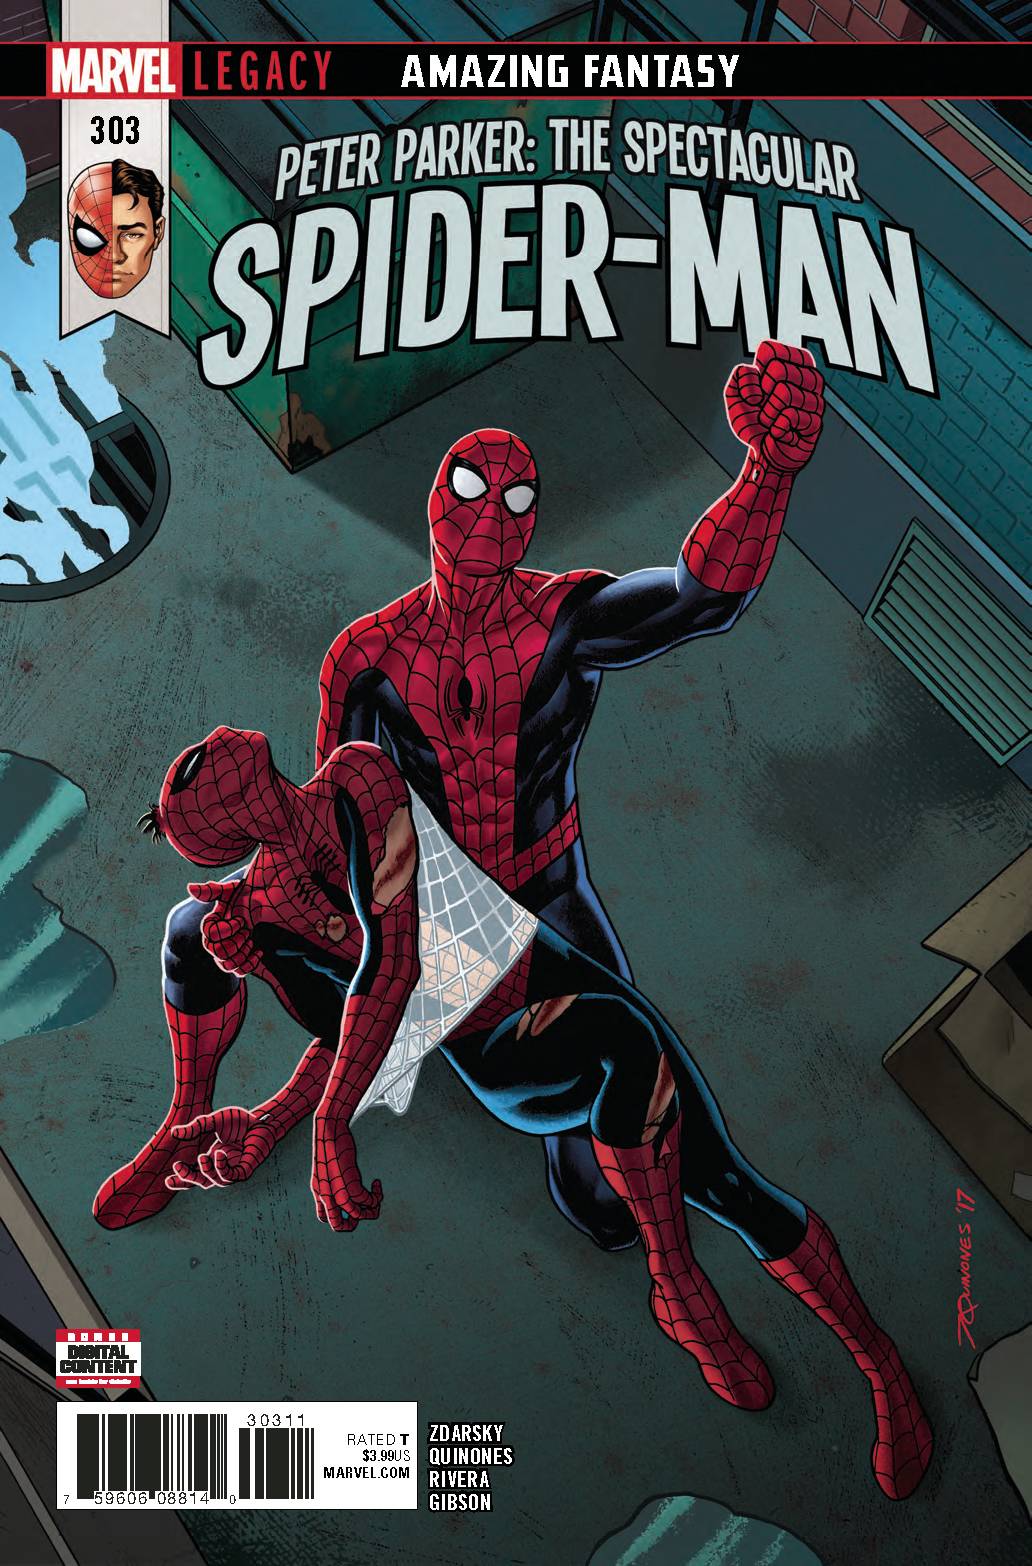 PETER PARKER SPECTACULAR SPIDER-MAN #303 LEG – Mushyhead Comics